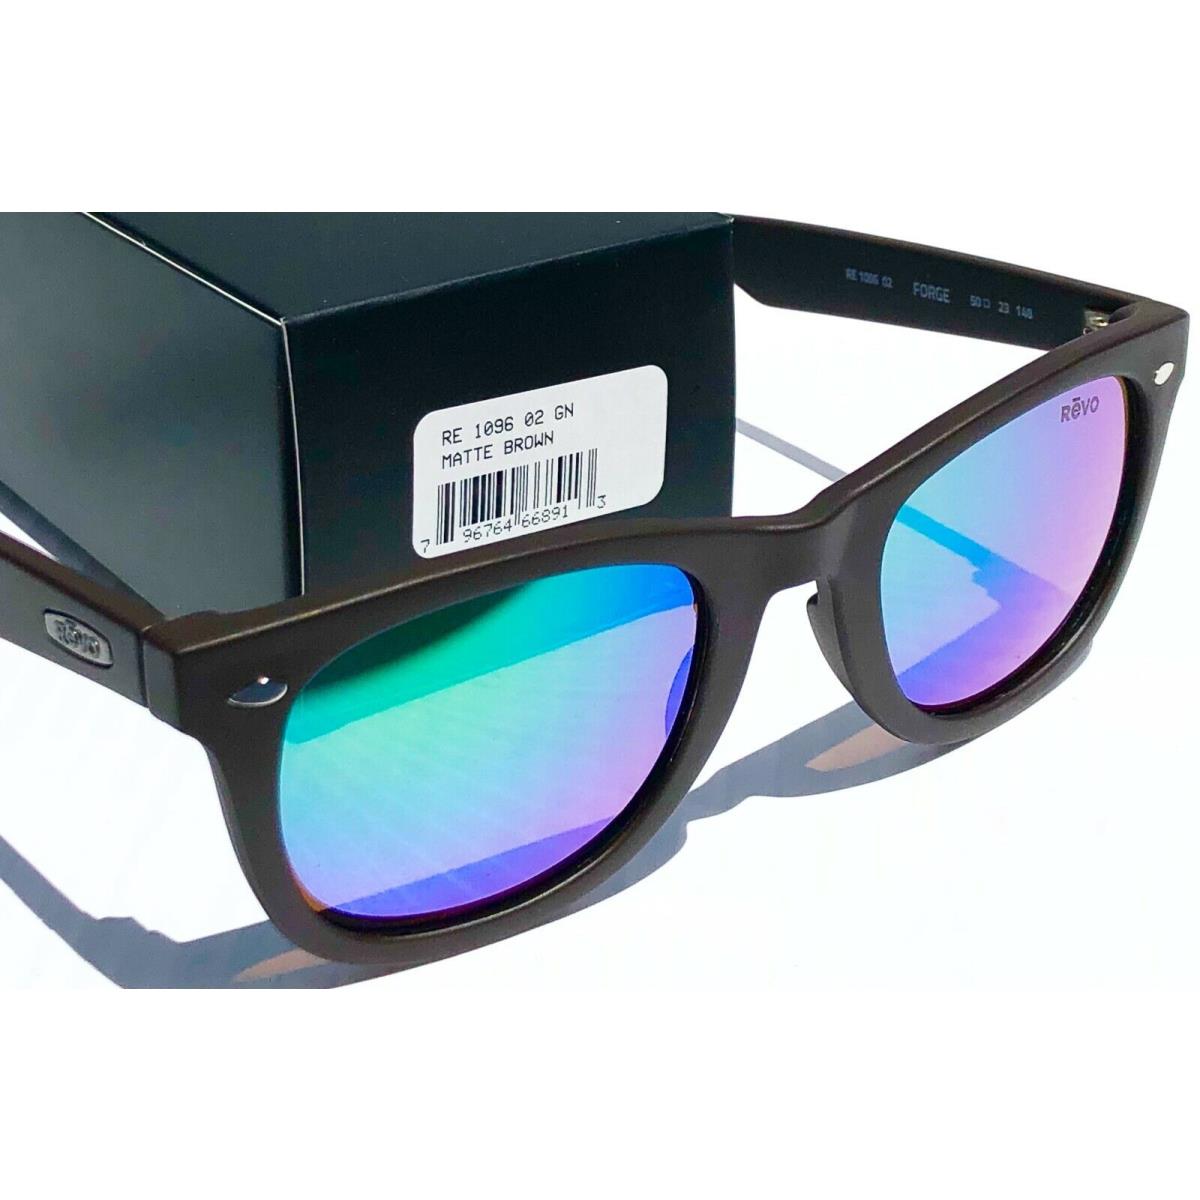 Revo sunglasses FORGE - Matte Brown Frame, Green Lens